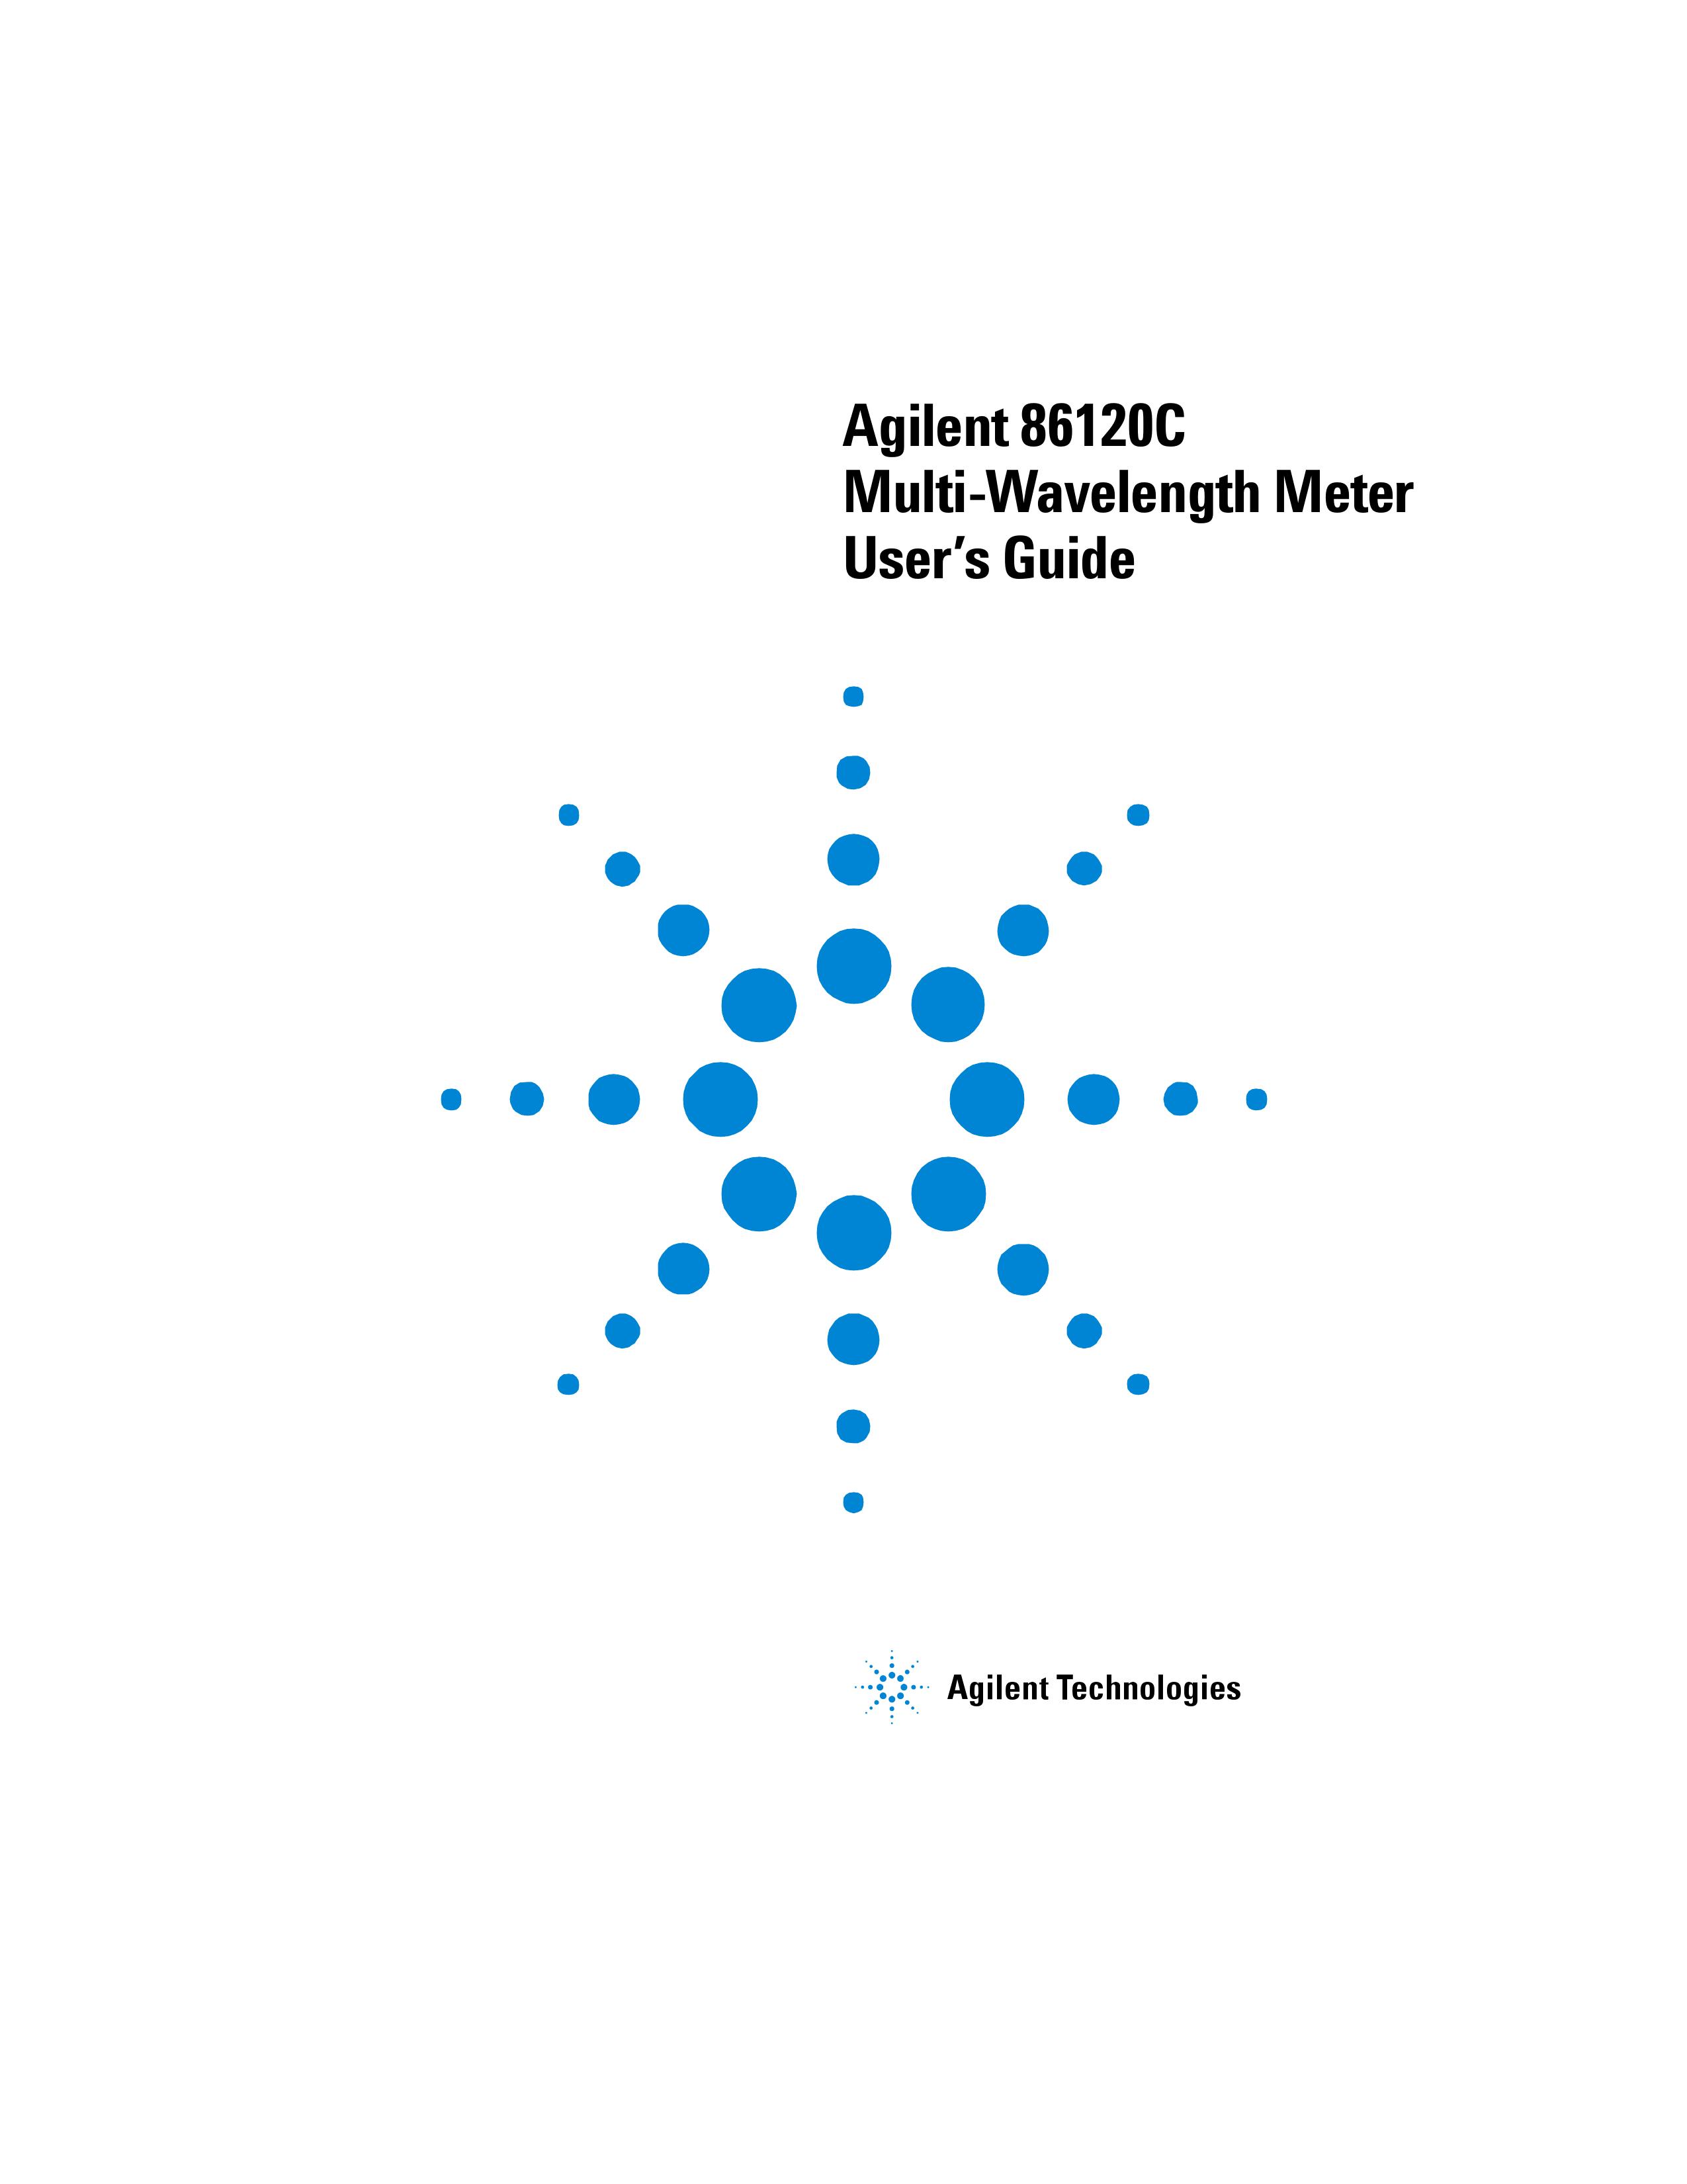 Agilent Technologies Agilent 86120C Ventilation Hood User Manual